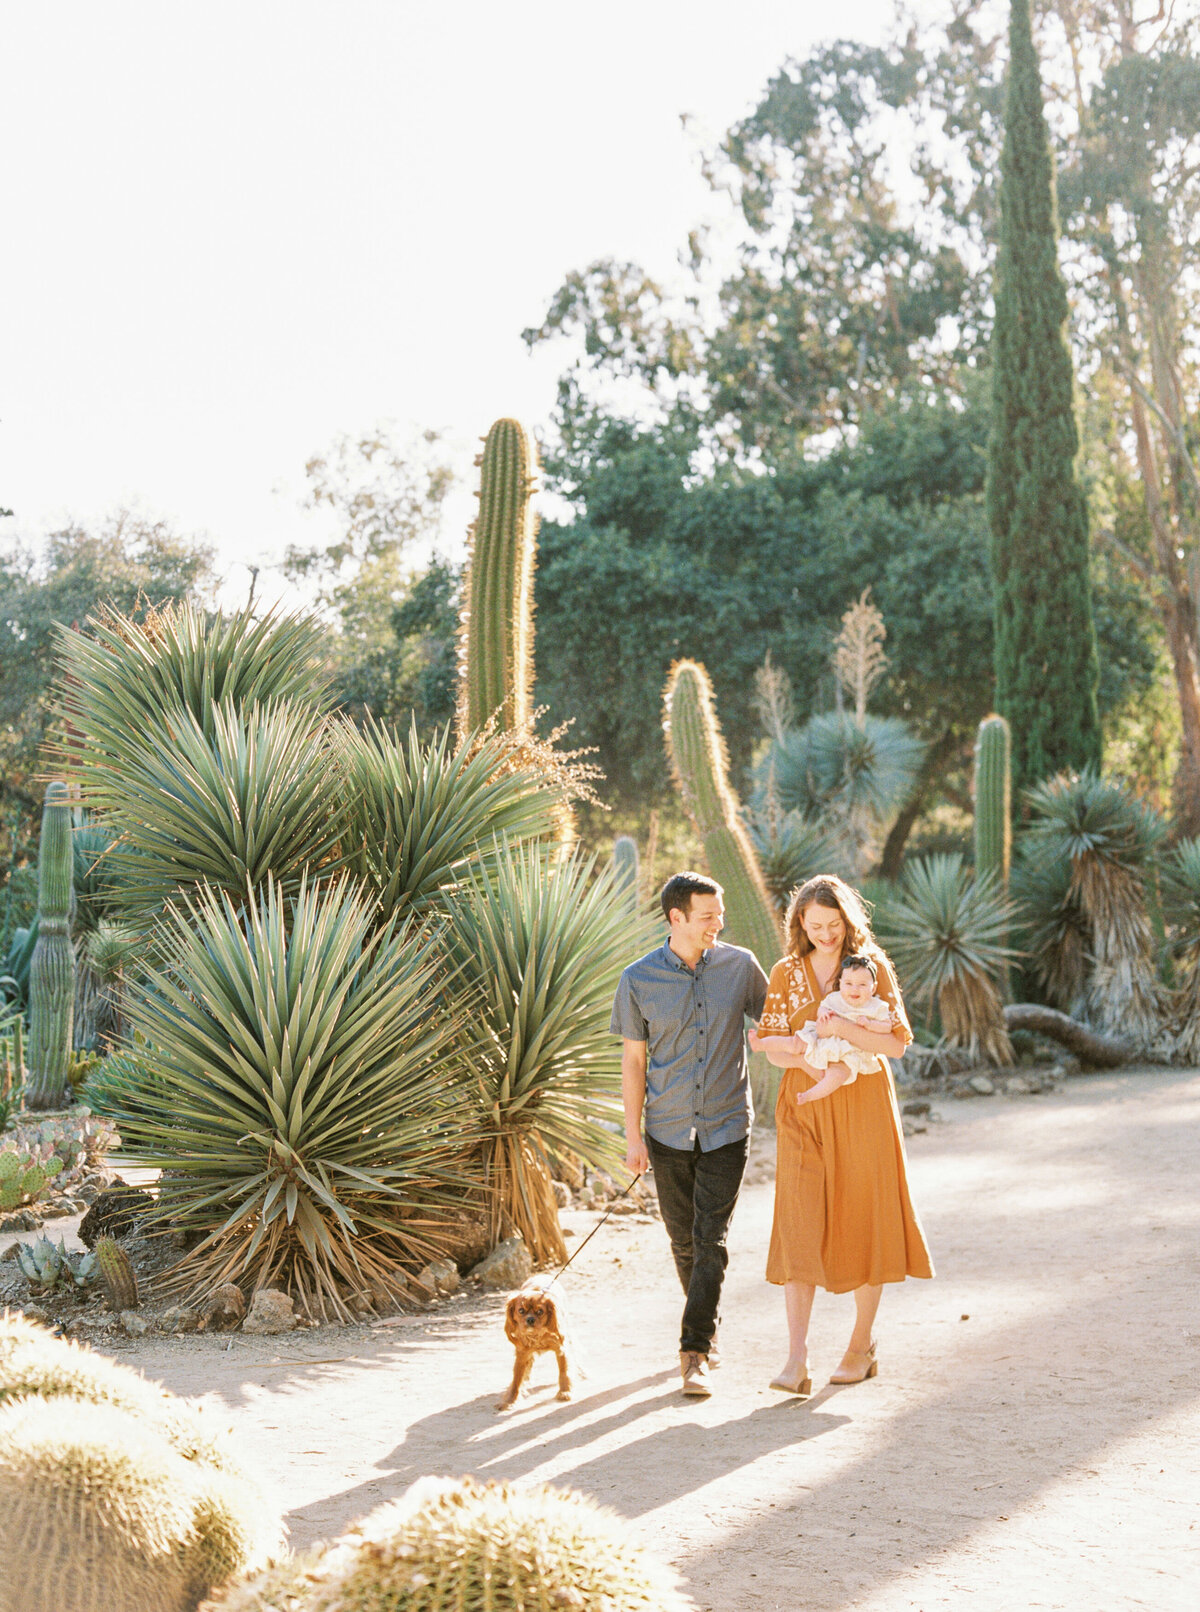 Olivia Marshall Photography- Cactus Desert Garden Family Photos-14